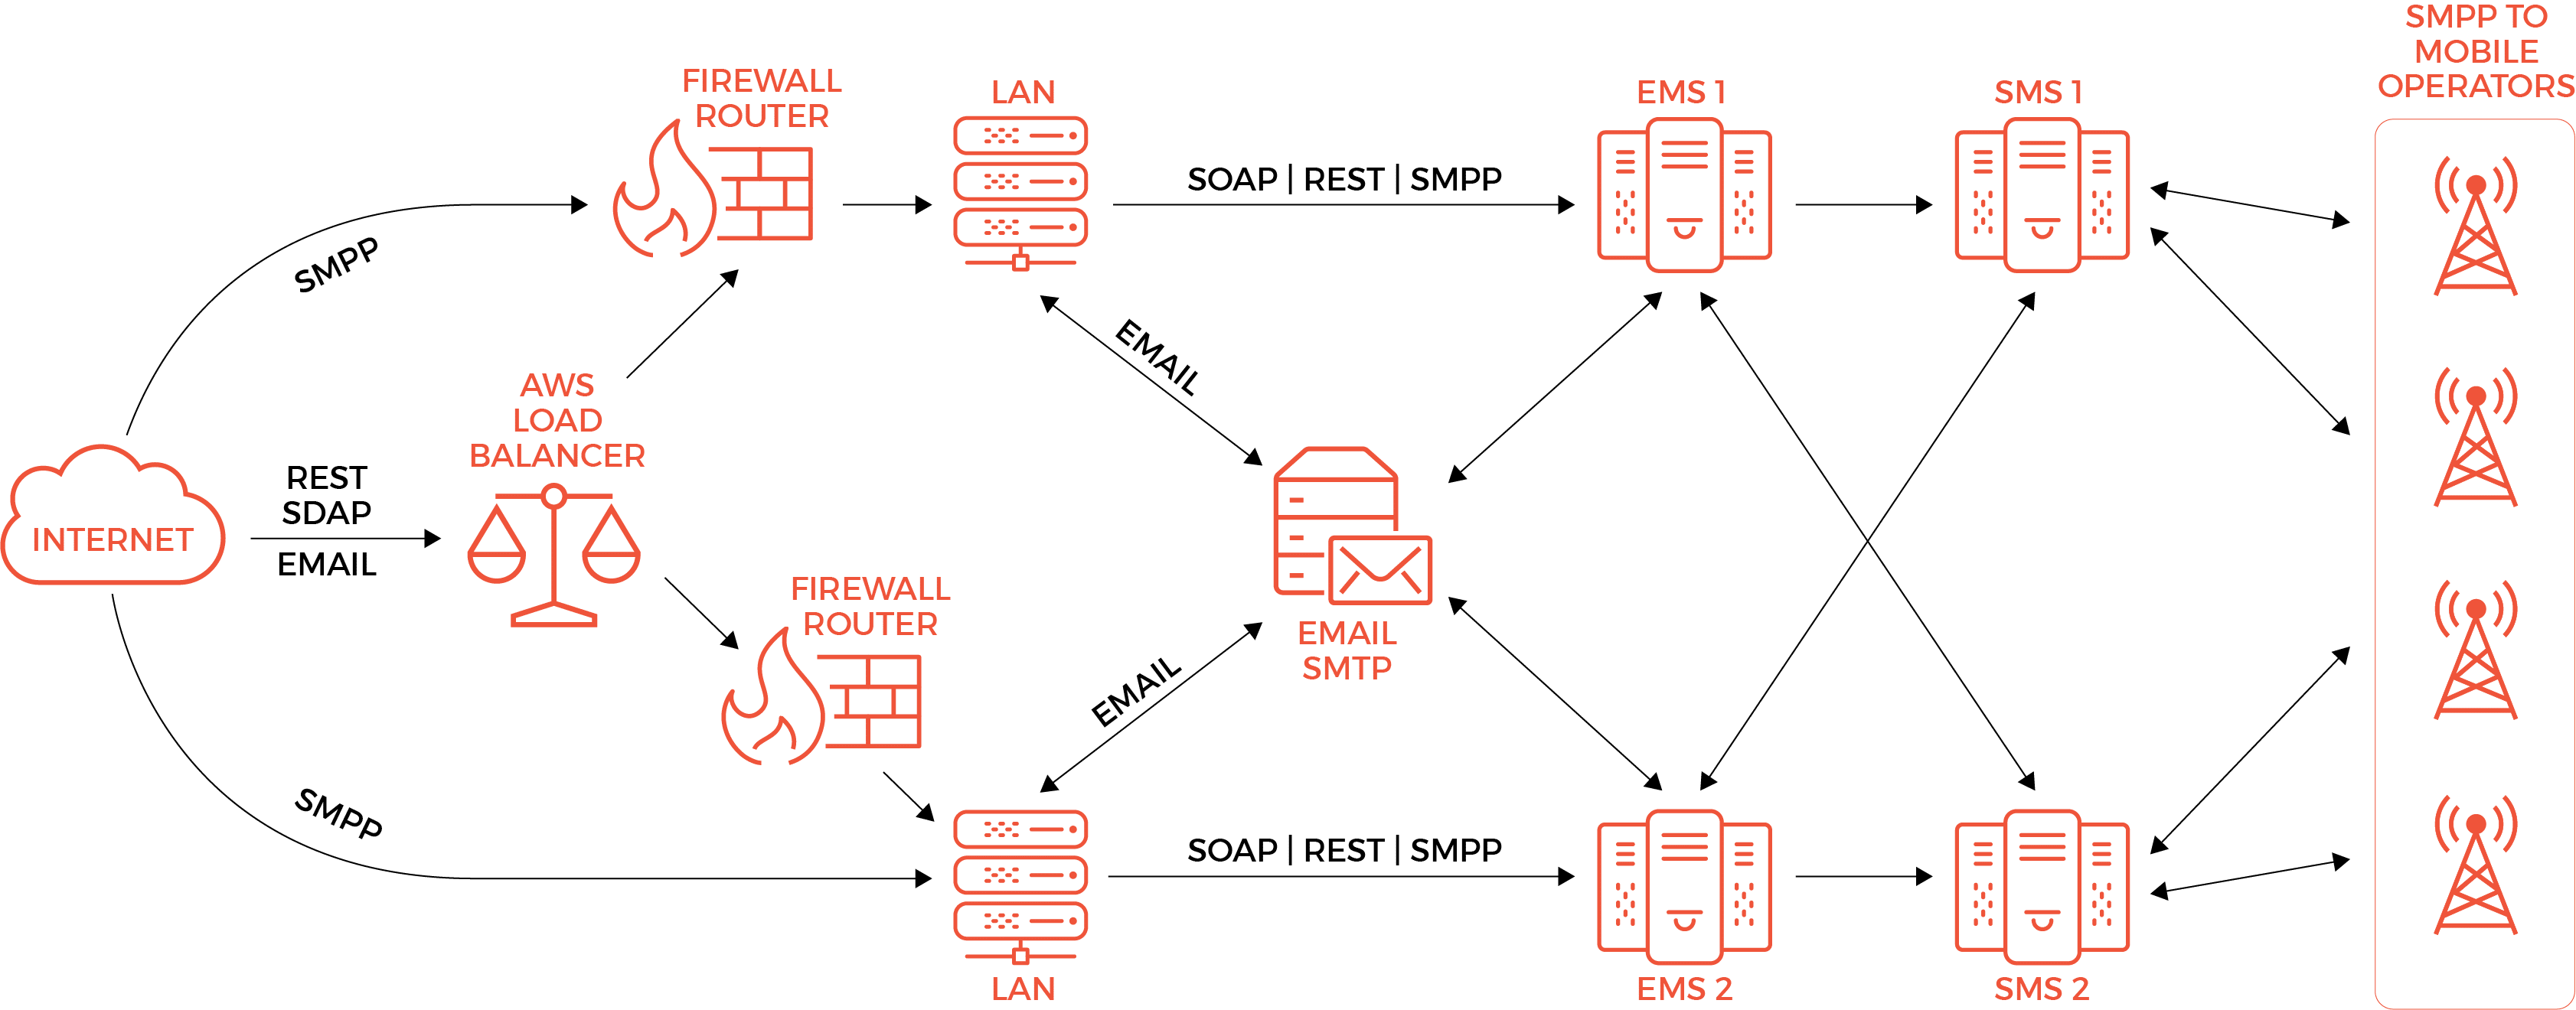 Intelli Messaging - Network Diagram